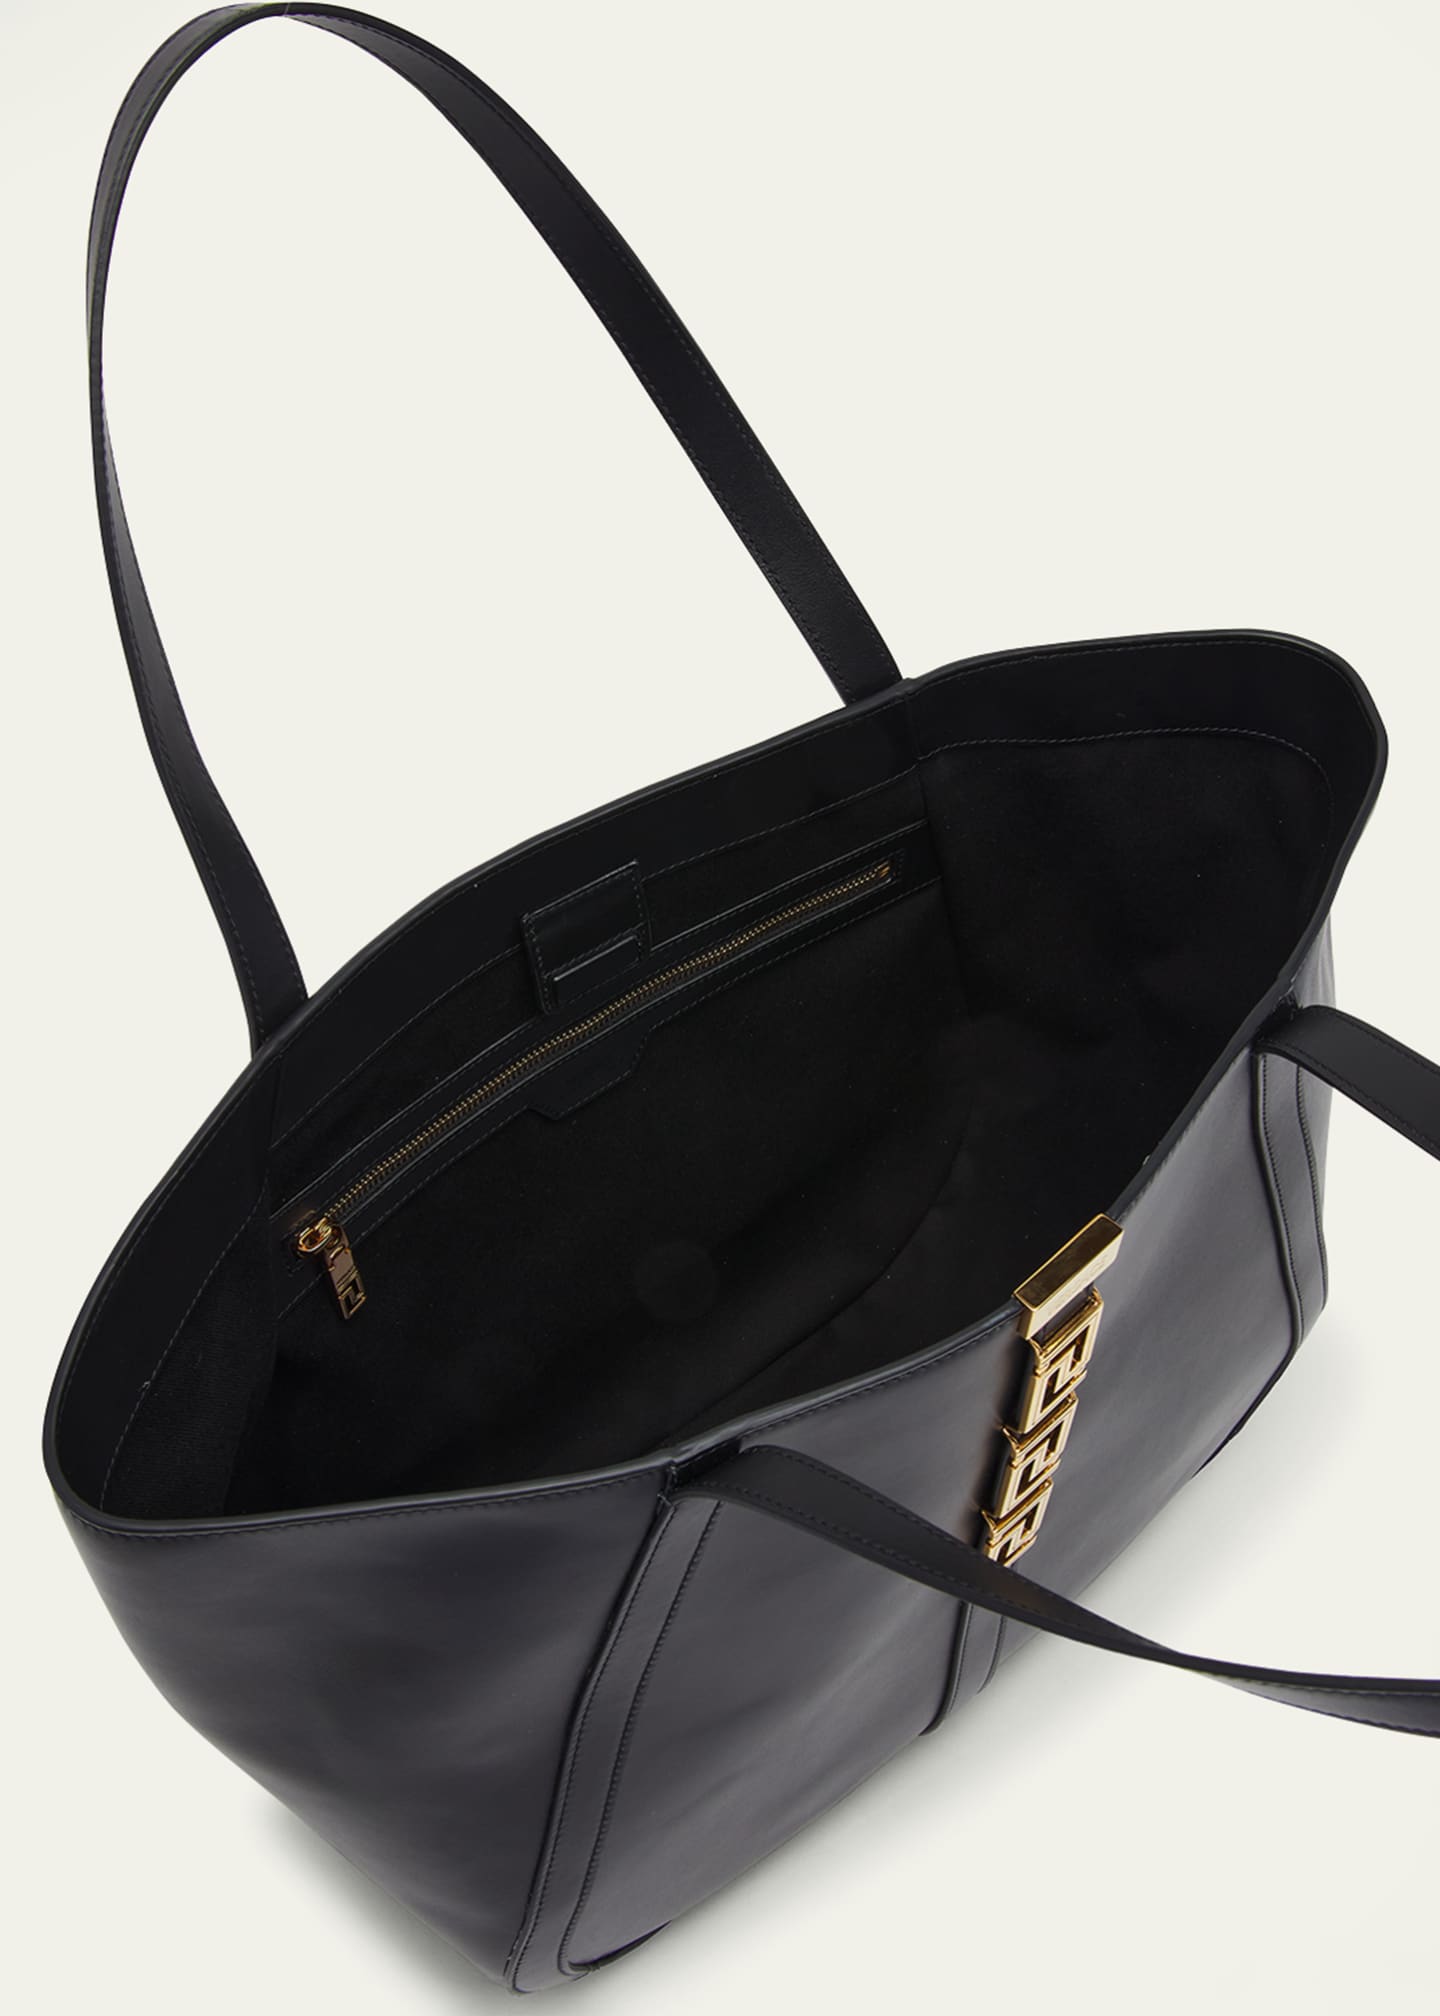 Greca Goddess Medium leather tote bag in black - Versace